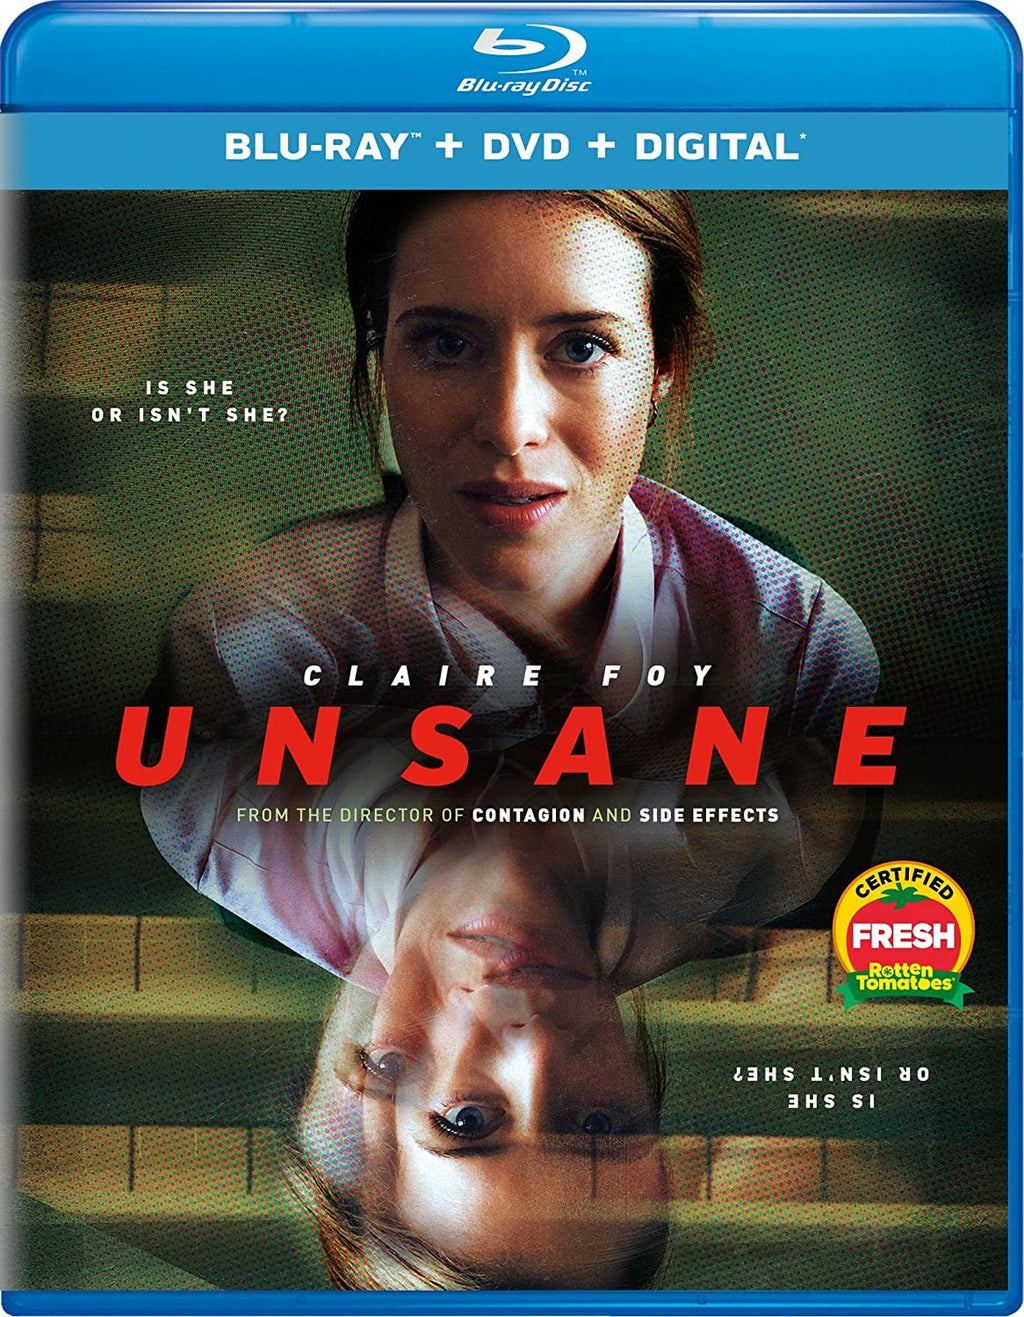 Unsane Blu-ray + DVD + Digital